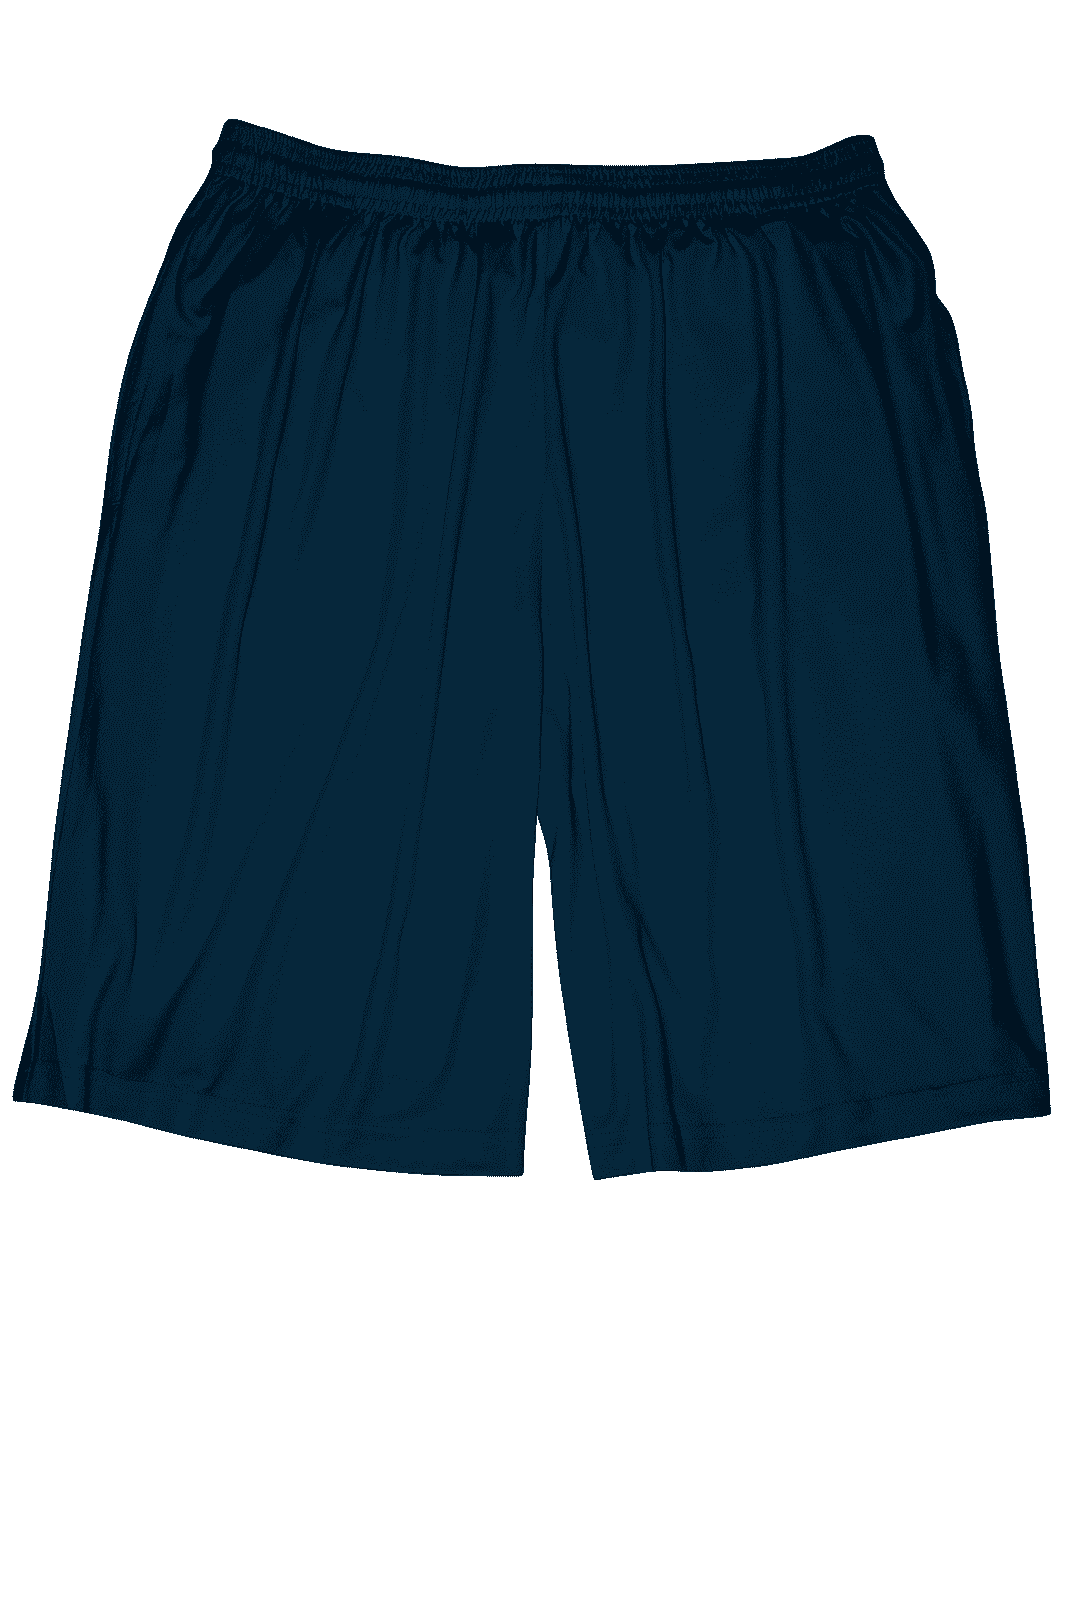 Paragon 600 Aussie Shorts - Navy - HIT a Double